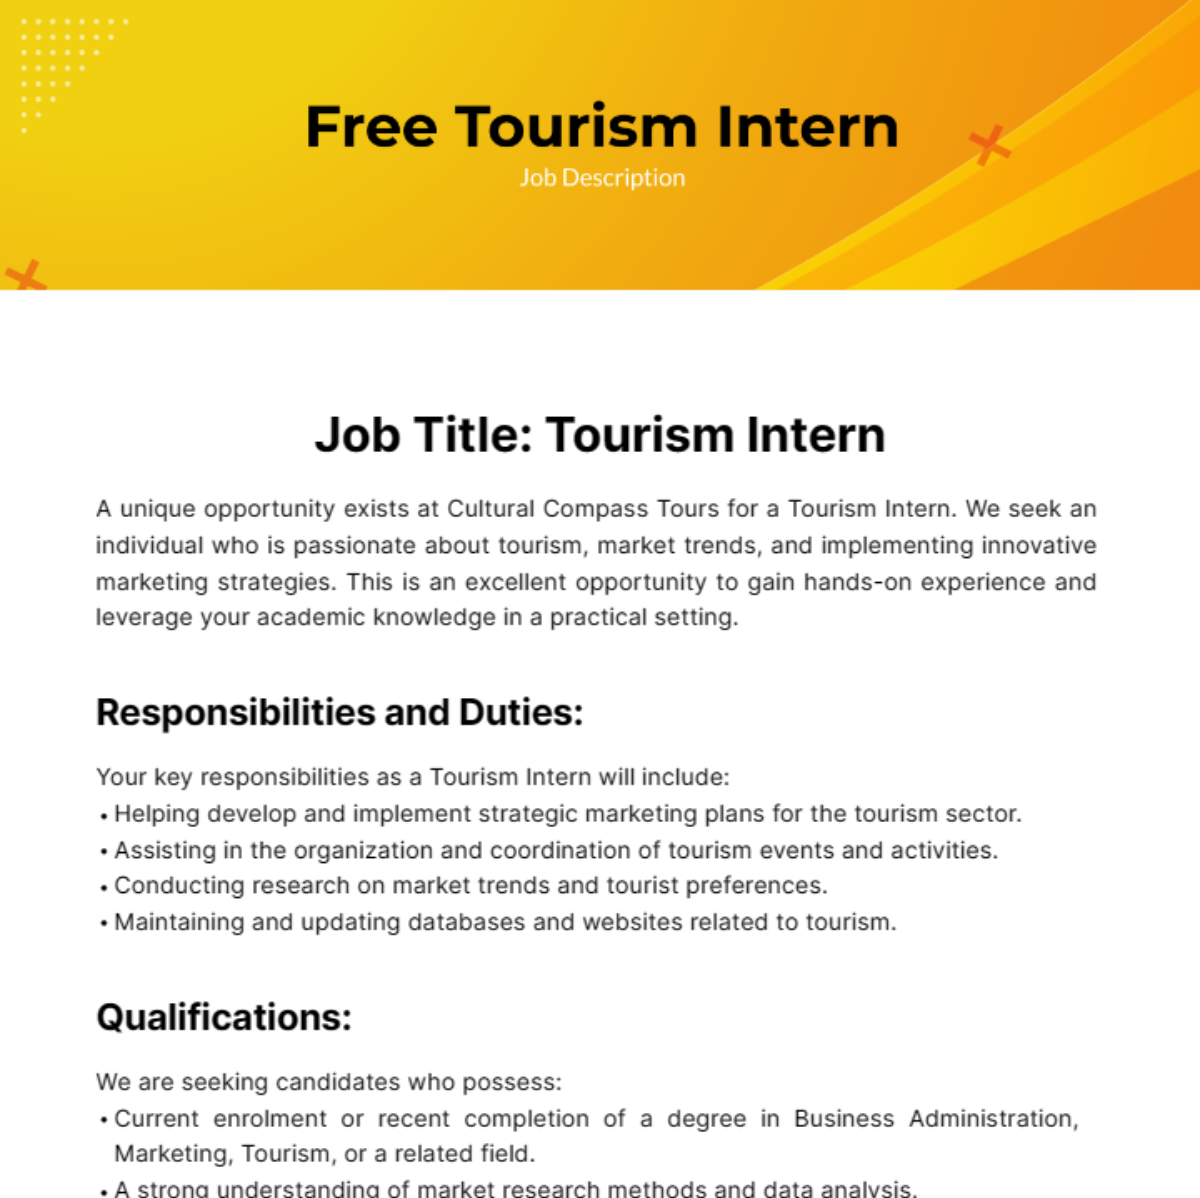 Free Tourism Intern Job Description Template